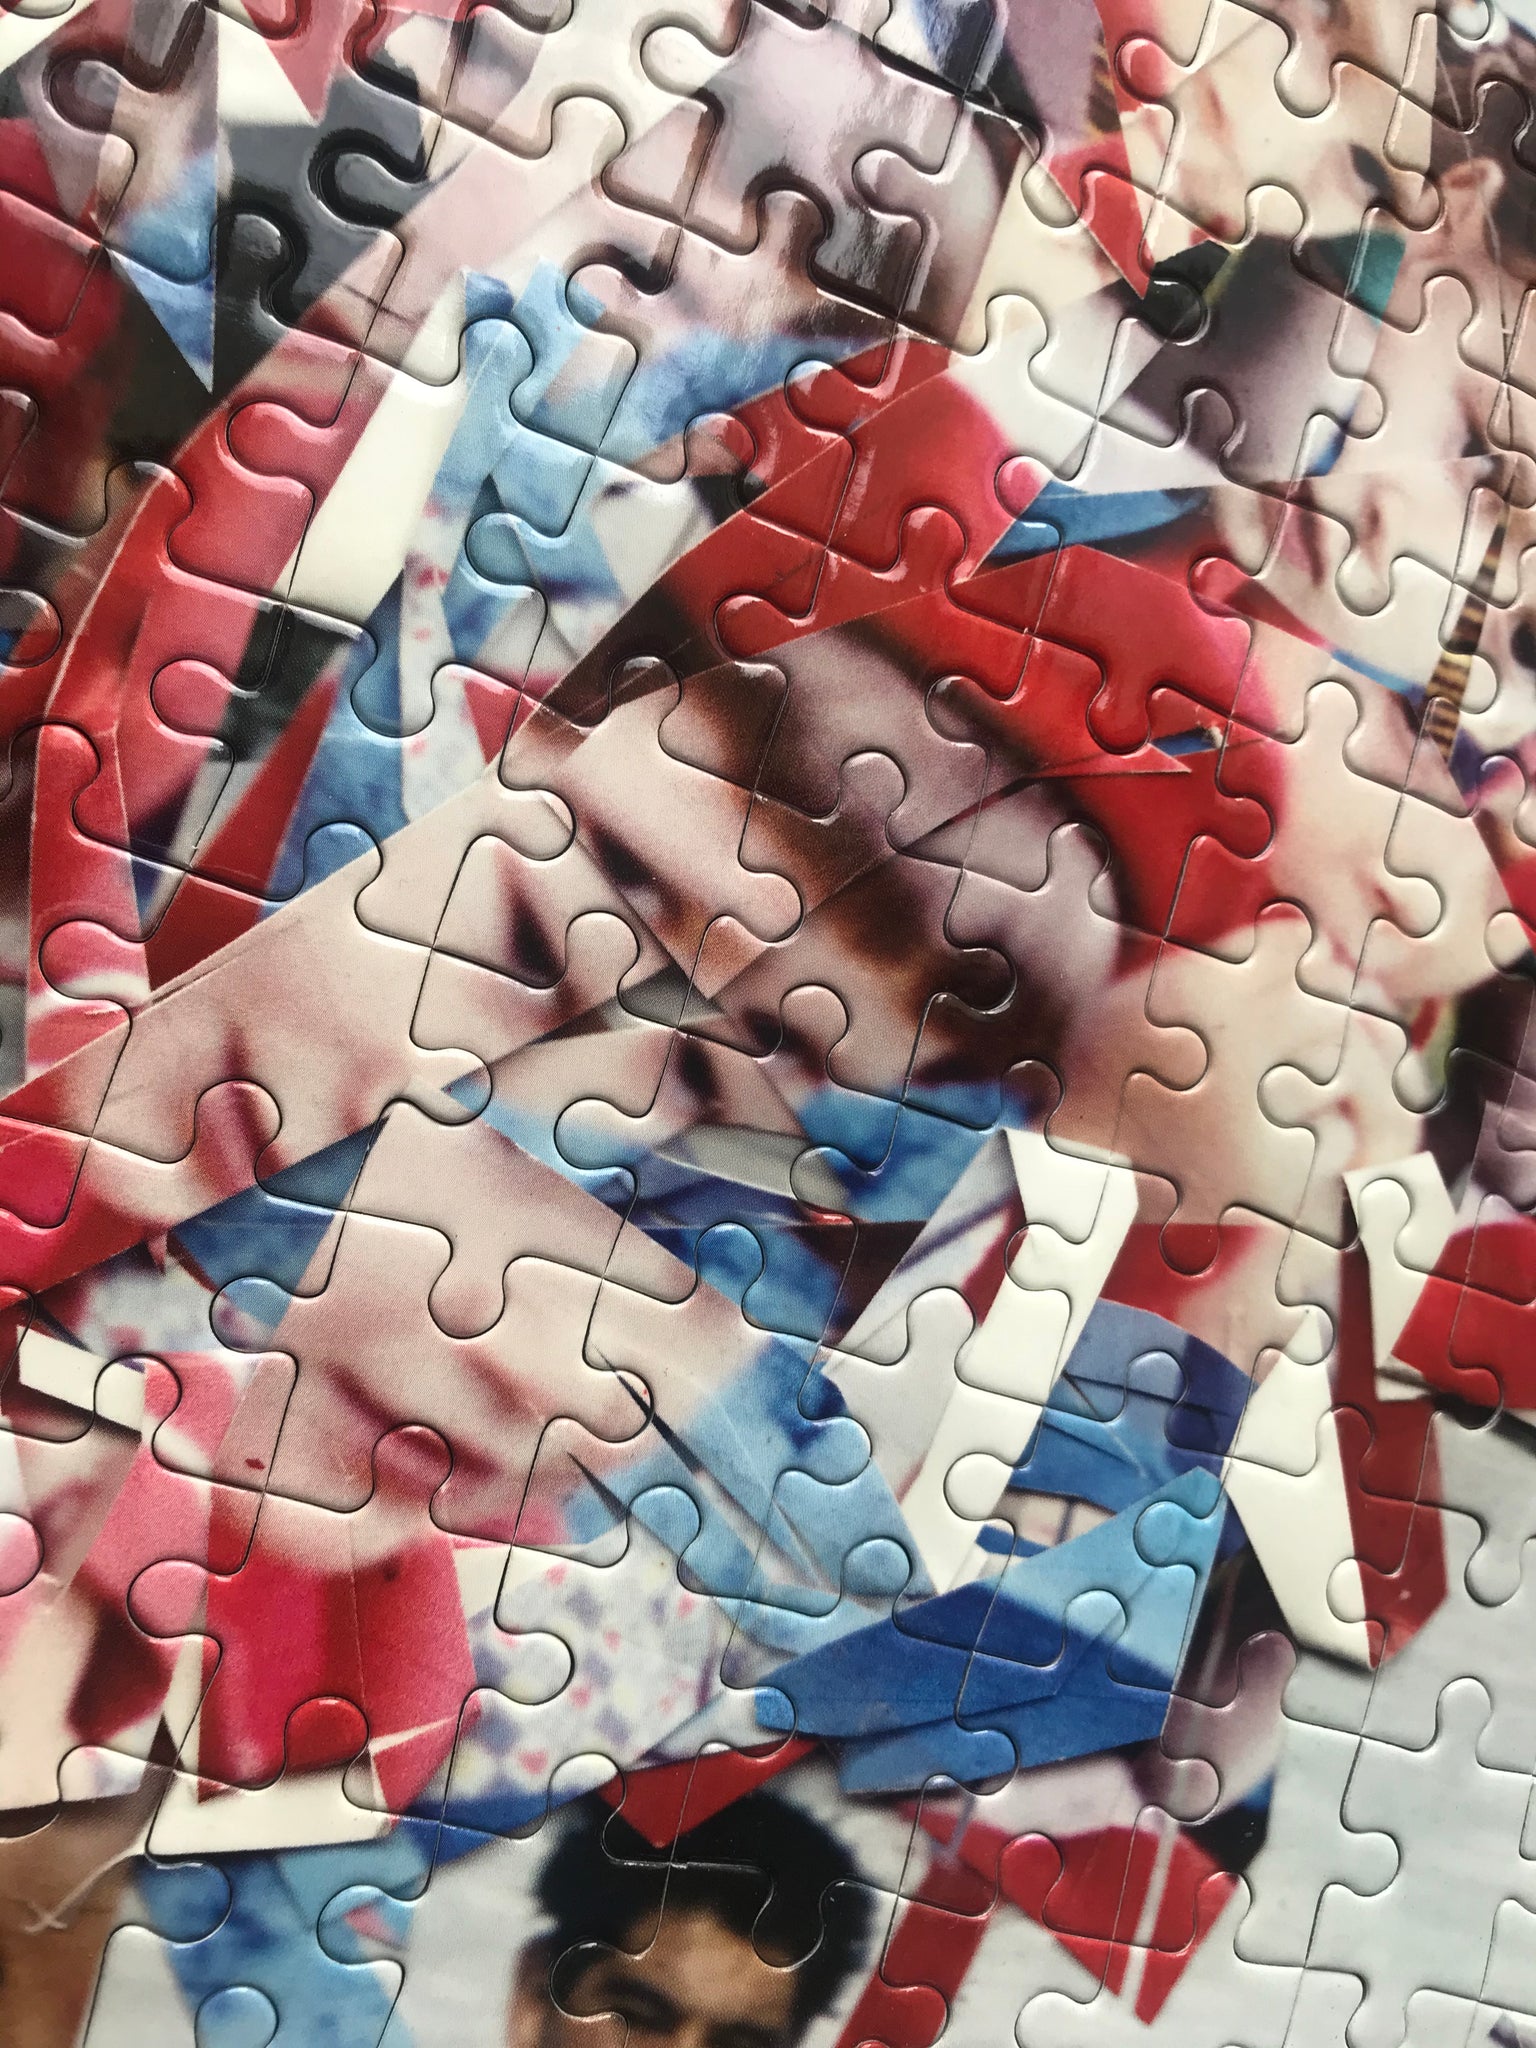 Artist Veronika Georgieva Collector Edition Jigsaw Puzzle